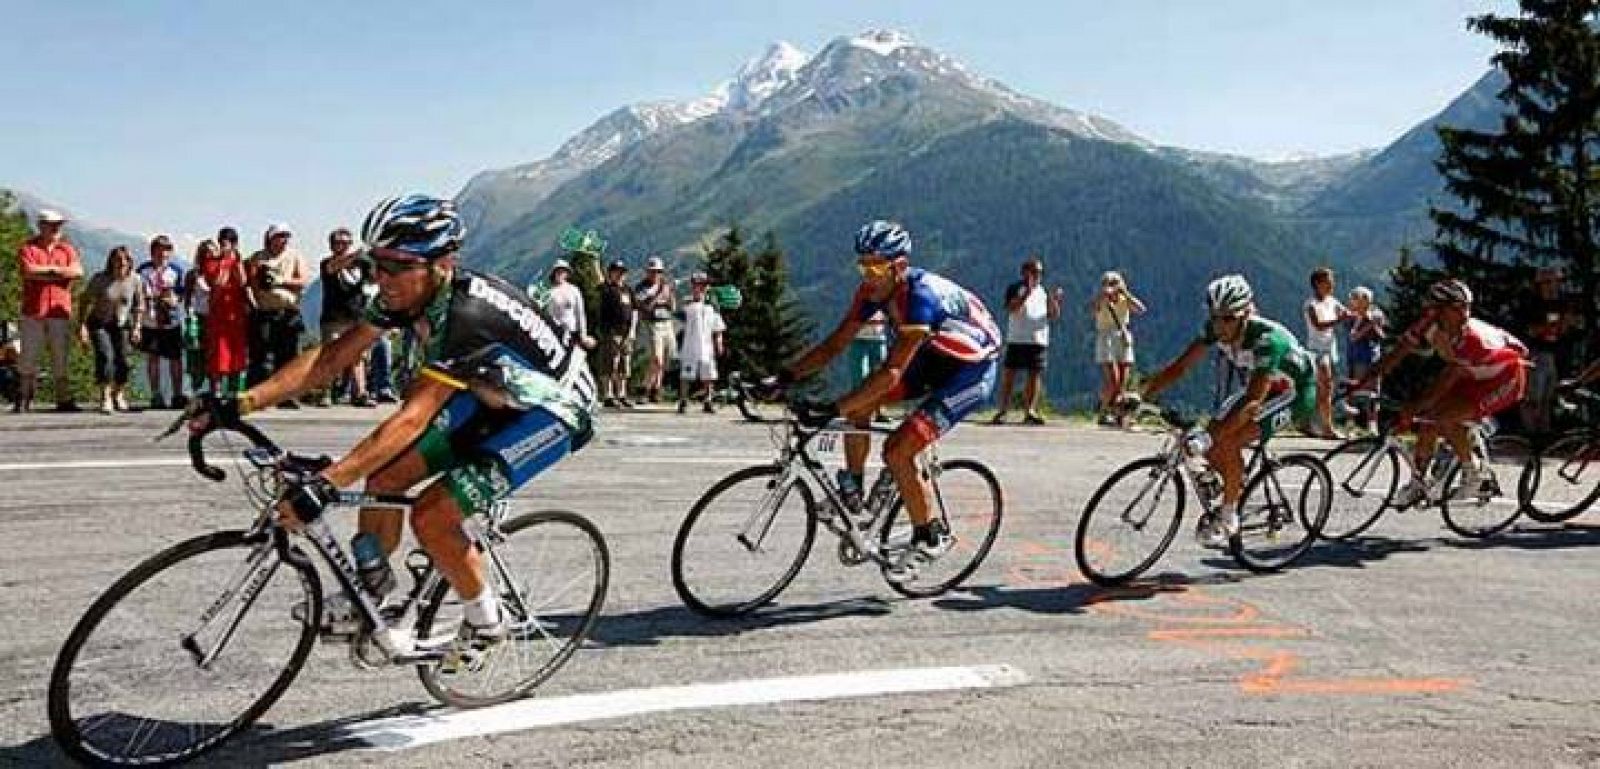 El tour 2008 será principalmente de alta montaña